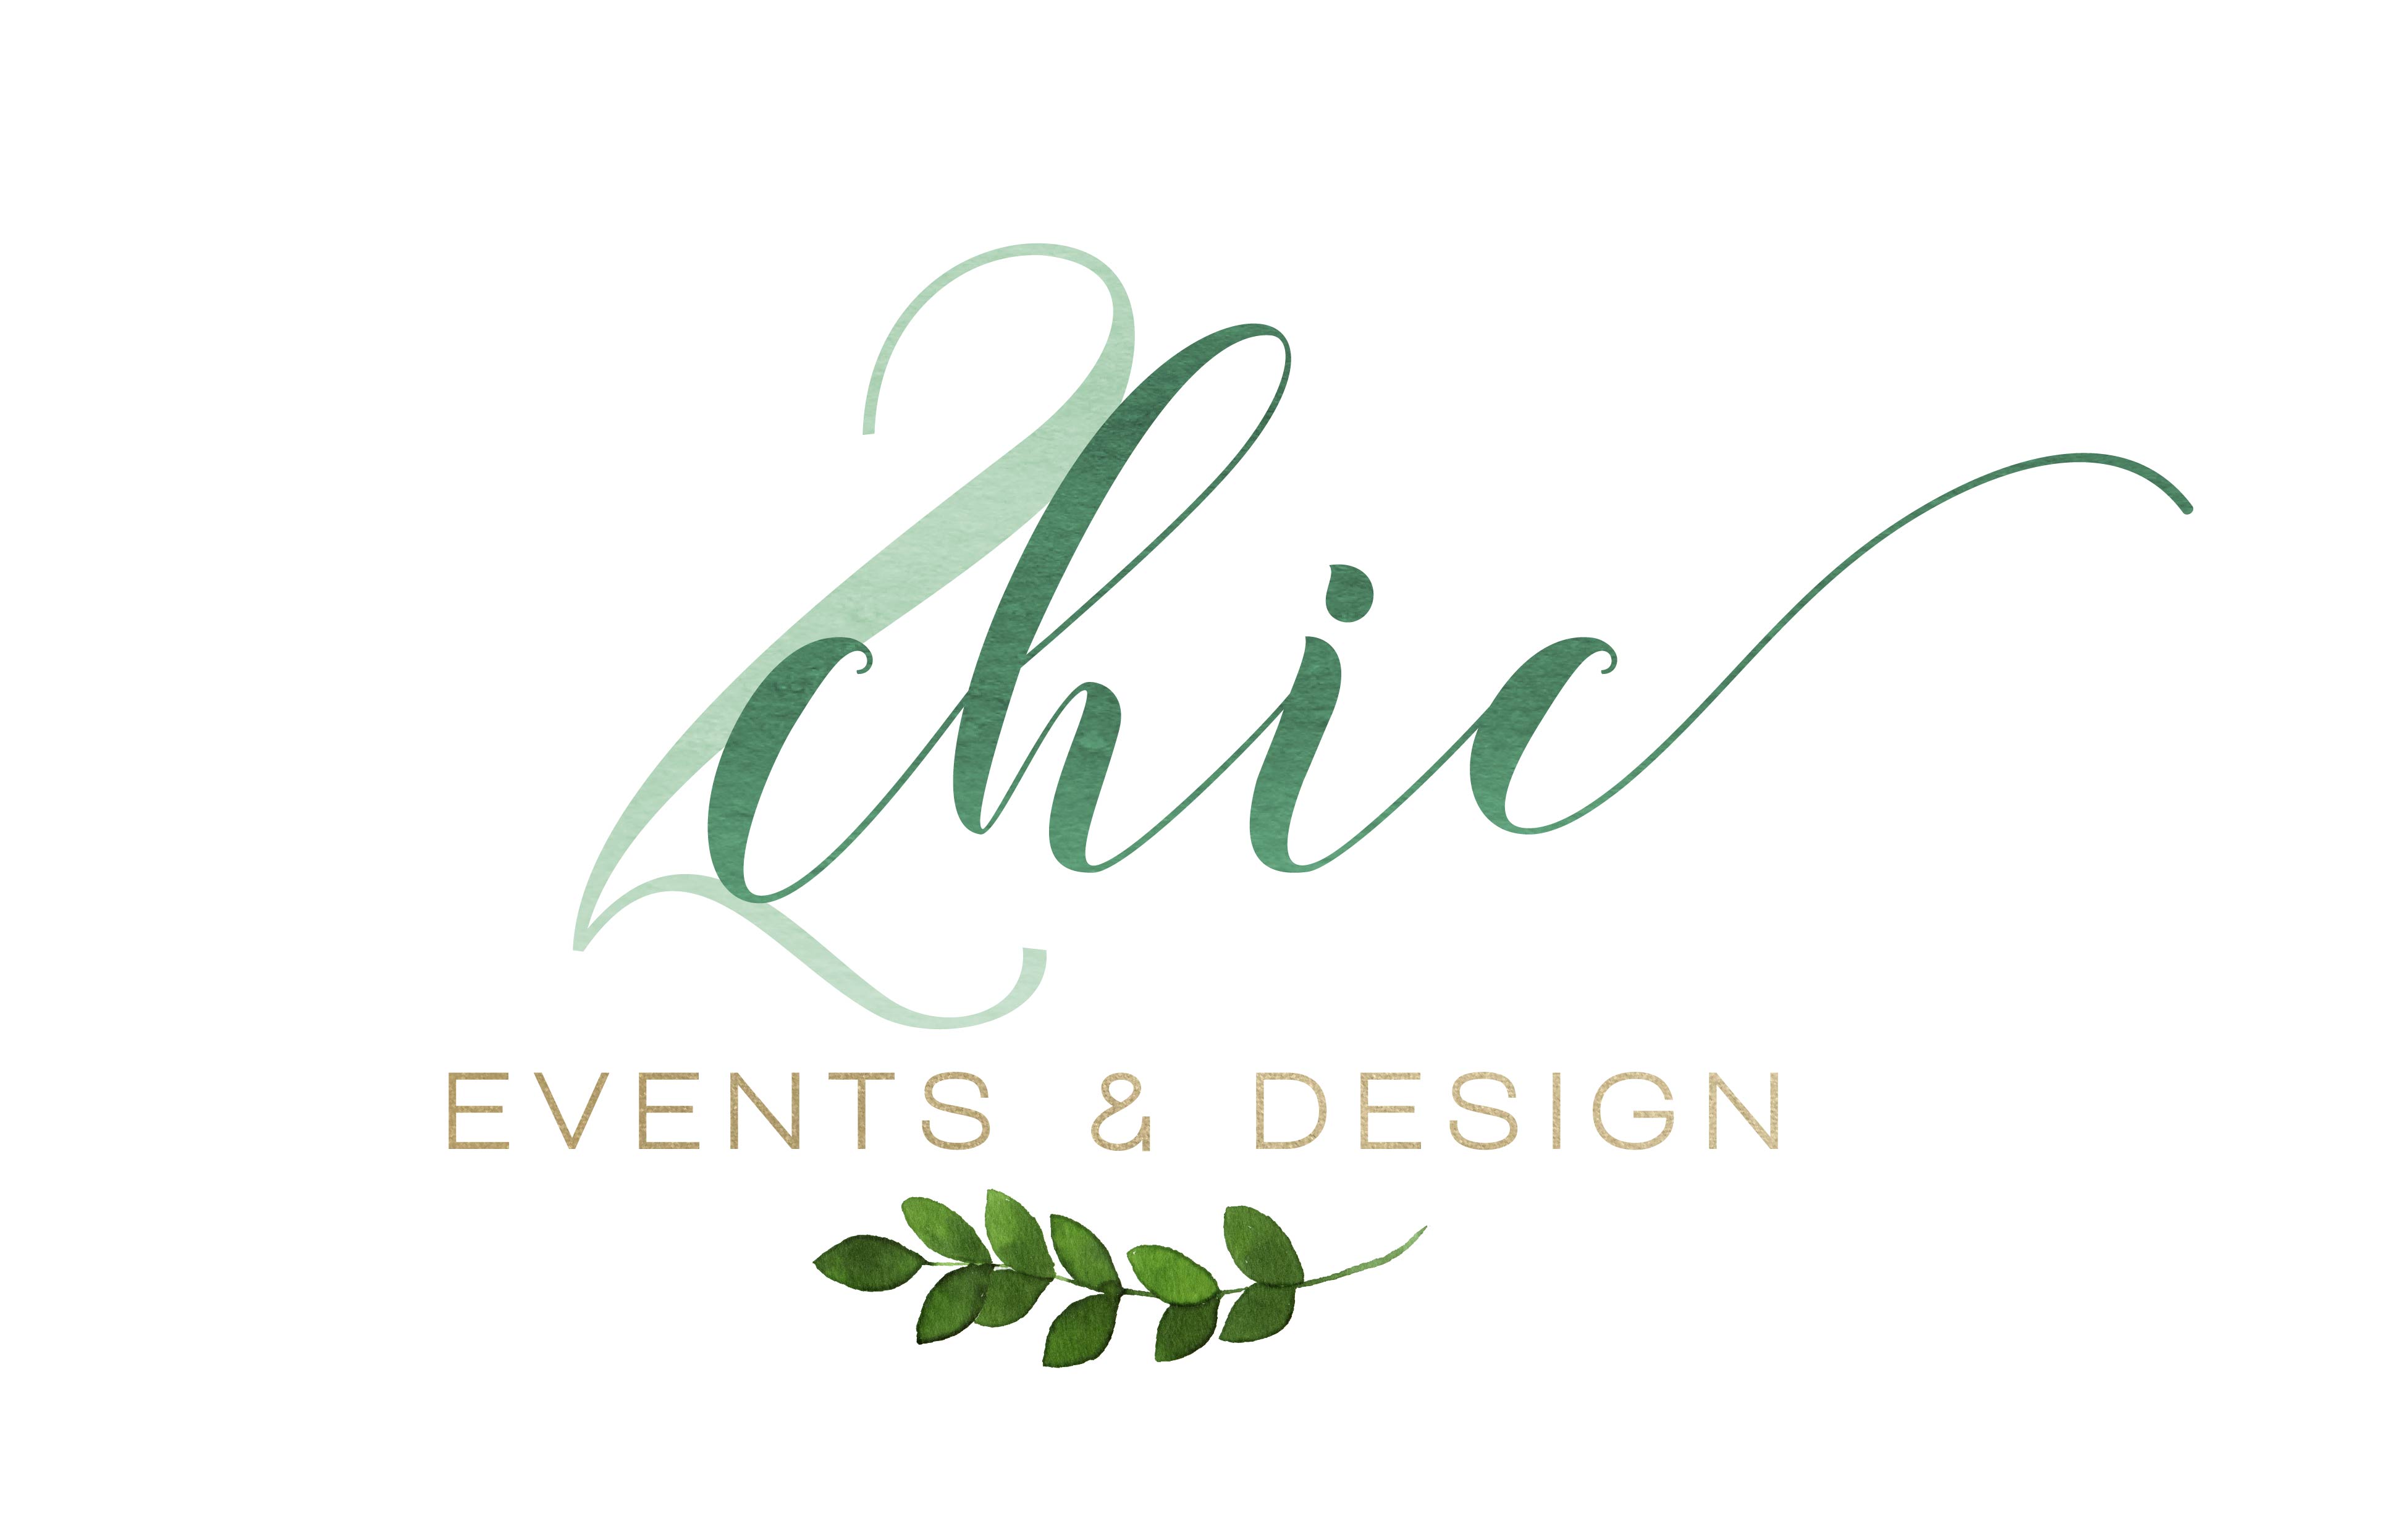 2 Chic Events & Design